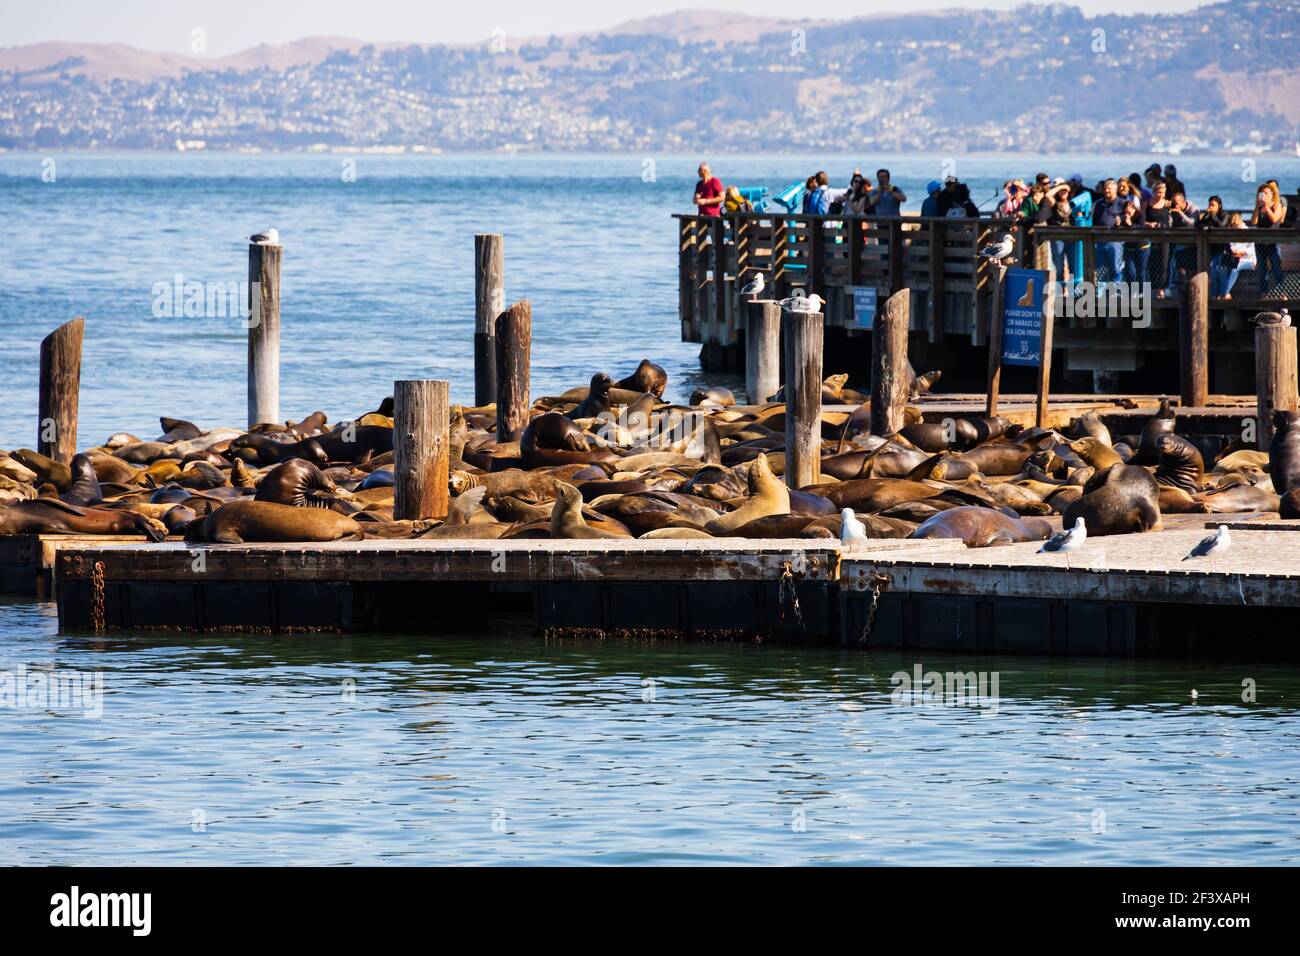 Tourists watching the famous California Sealions, California zalophus, at Pier 39, San Francisco, California, United States of America. Stock Photo